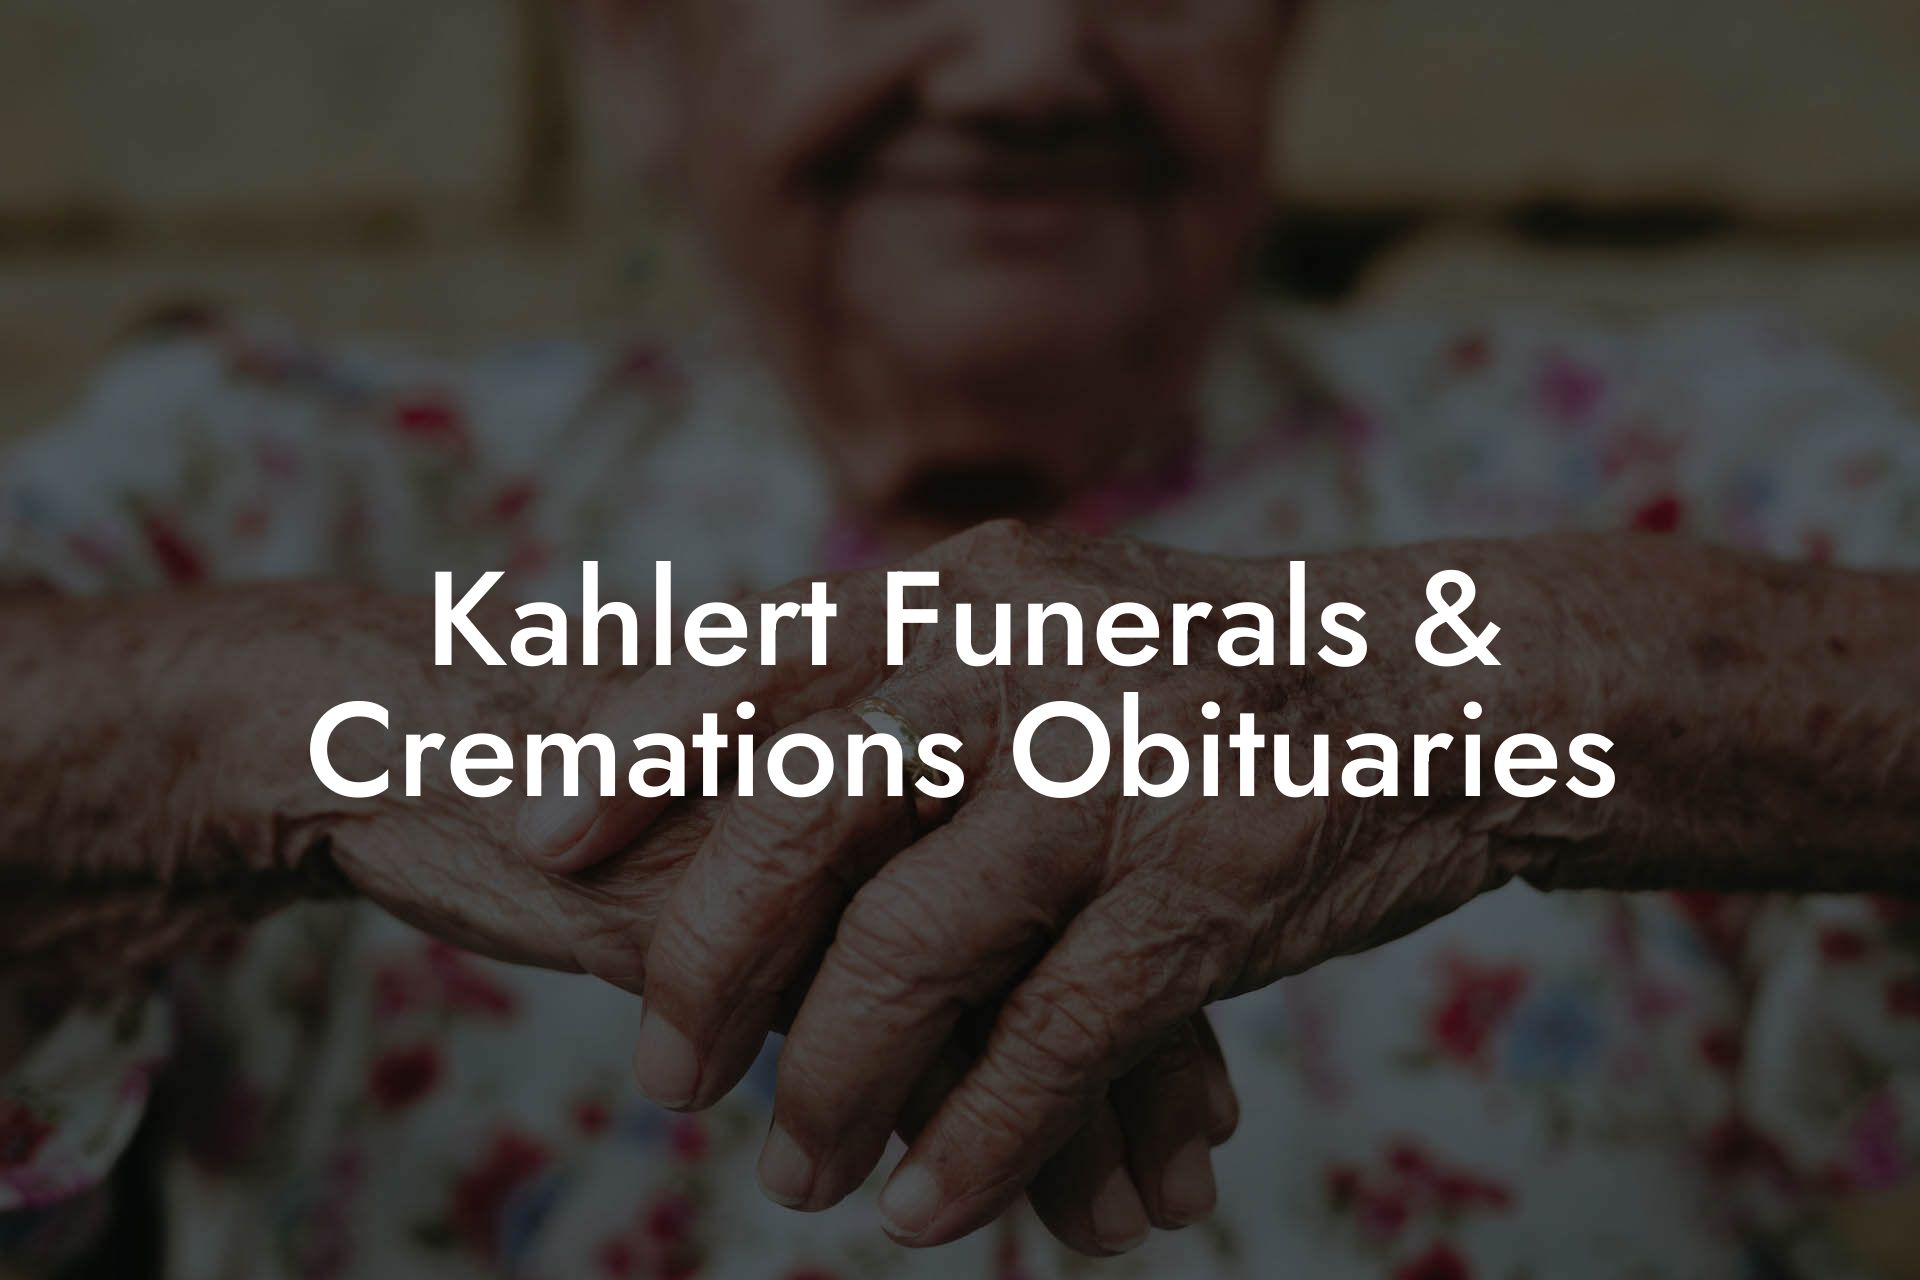 Kahlert Funerals & Cremations Obituaries